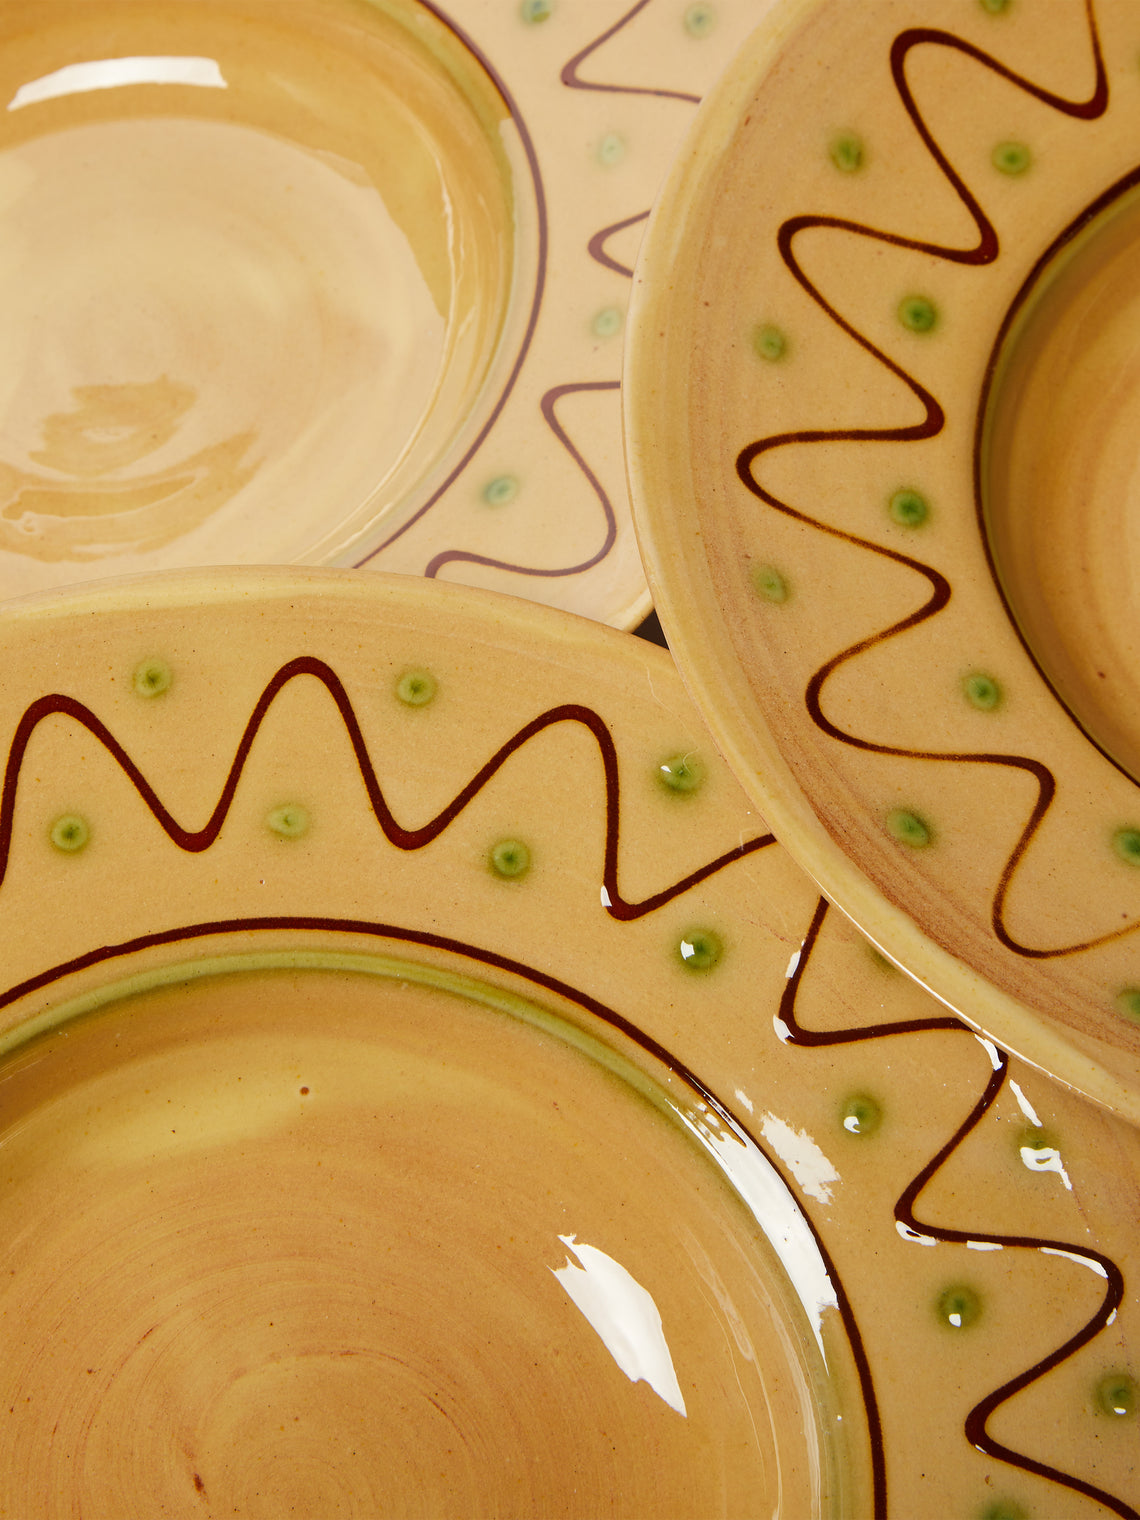 Poterie de Cliousclat - Hand-Painted Slipware Pasta Bowls (Set of 4) -  - ABASK